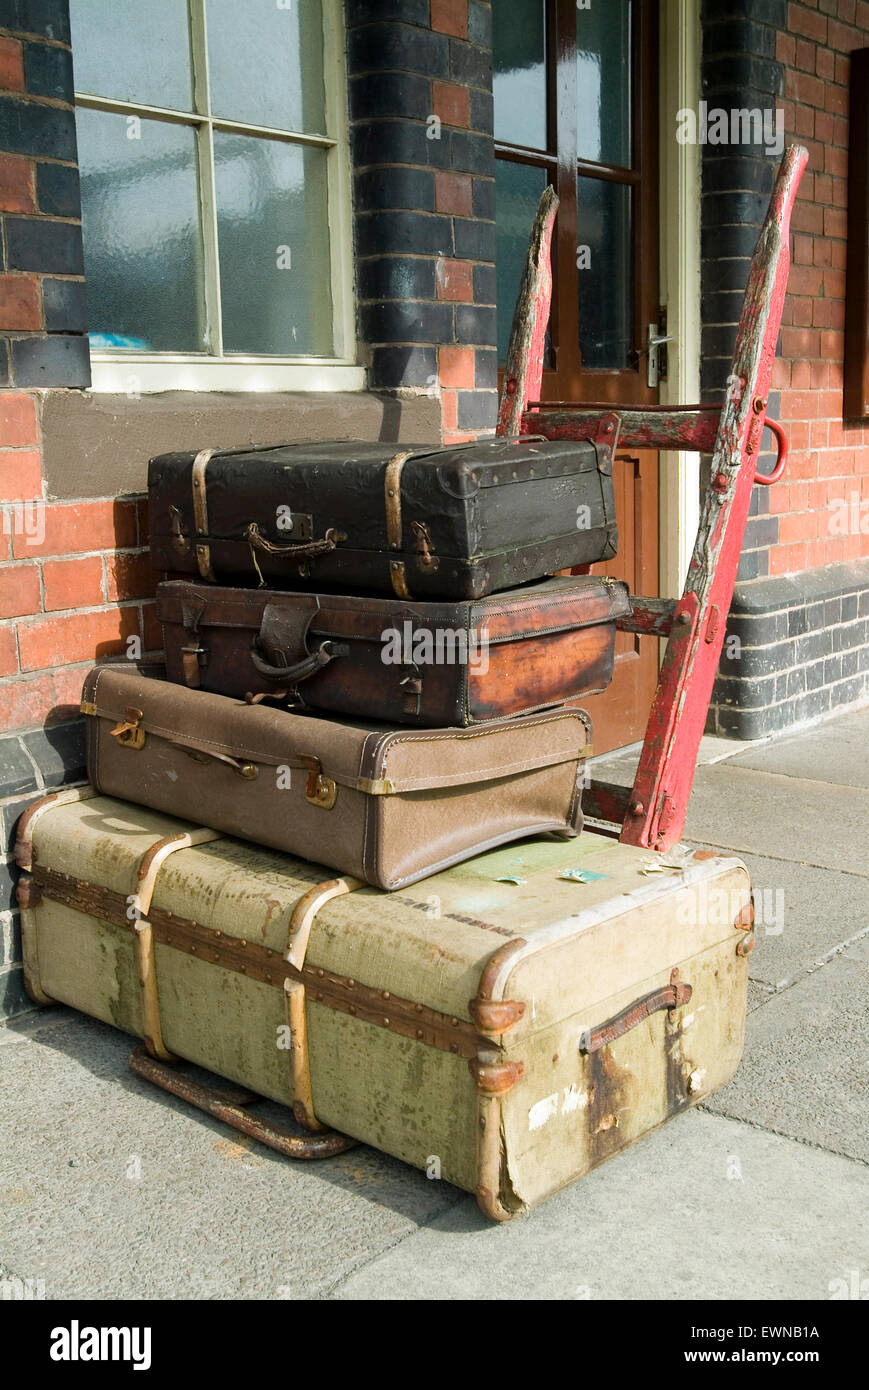 Stacked luggages on a railway station England UK Europe Stock Photo